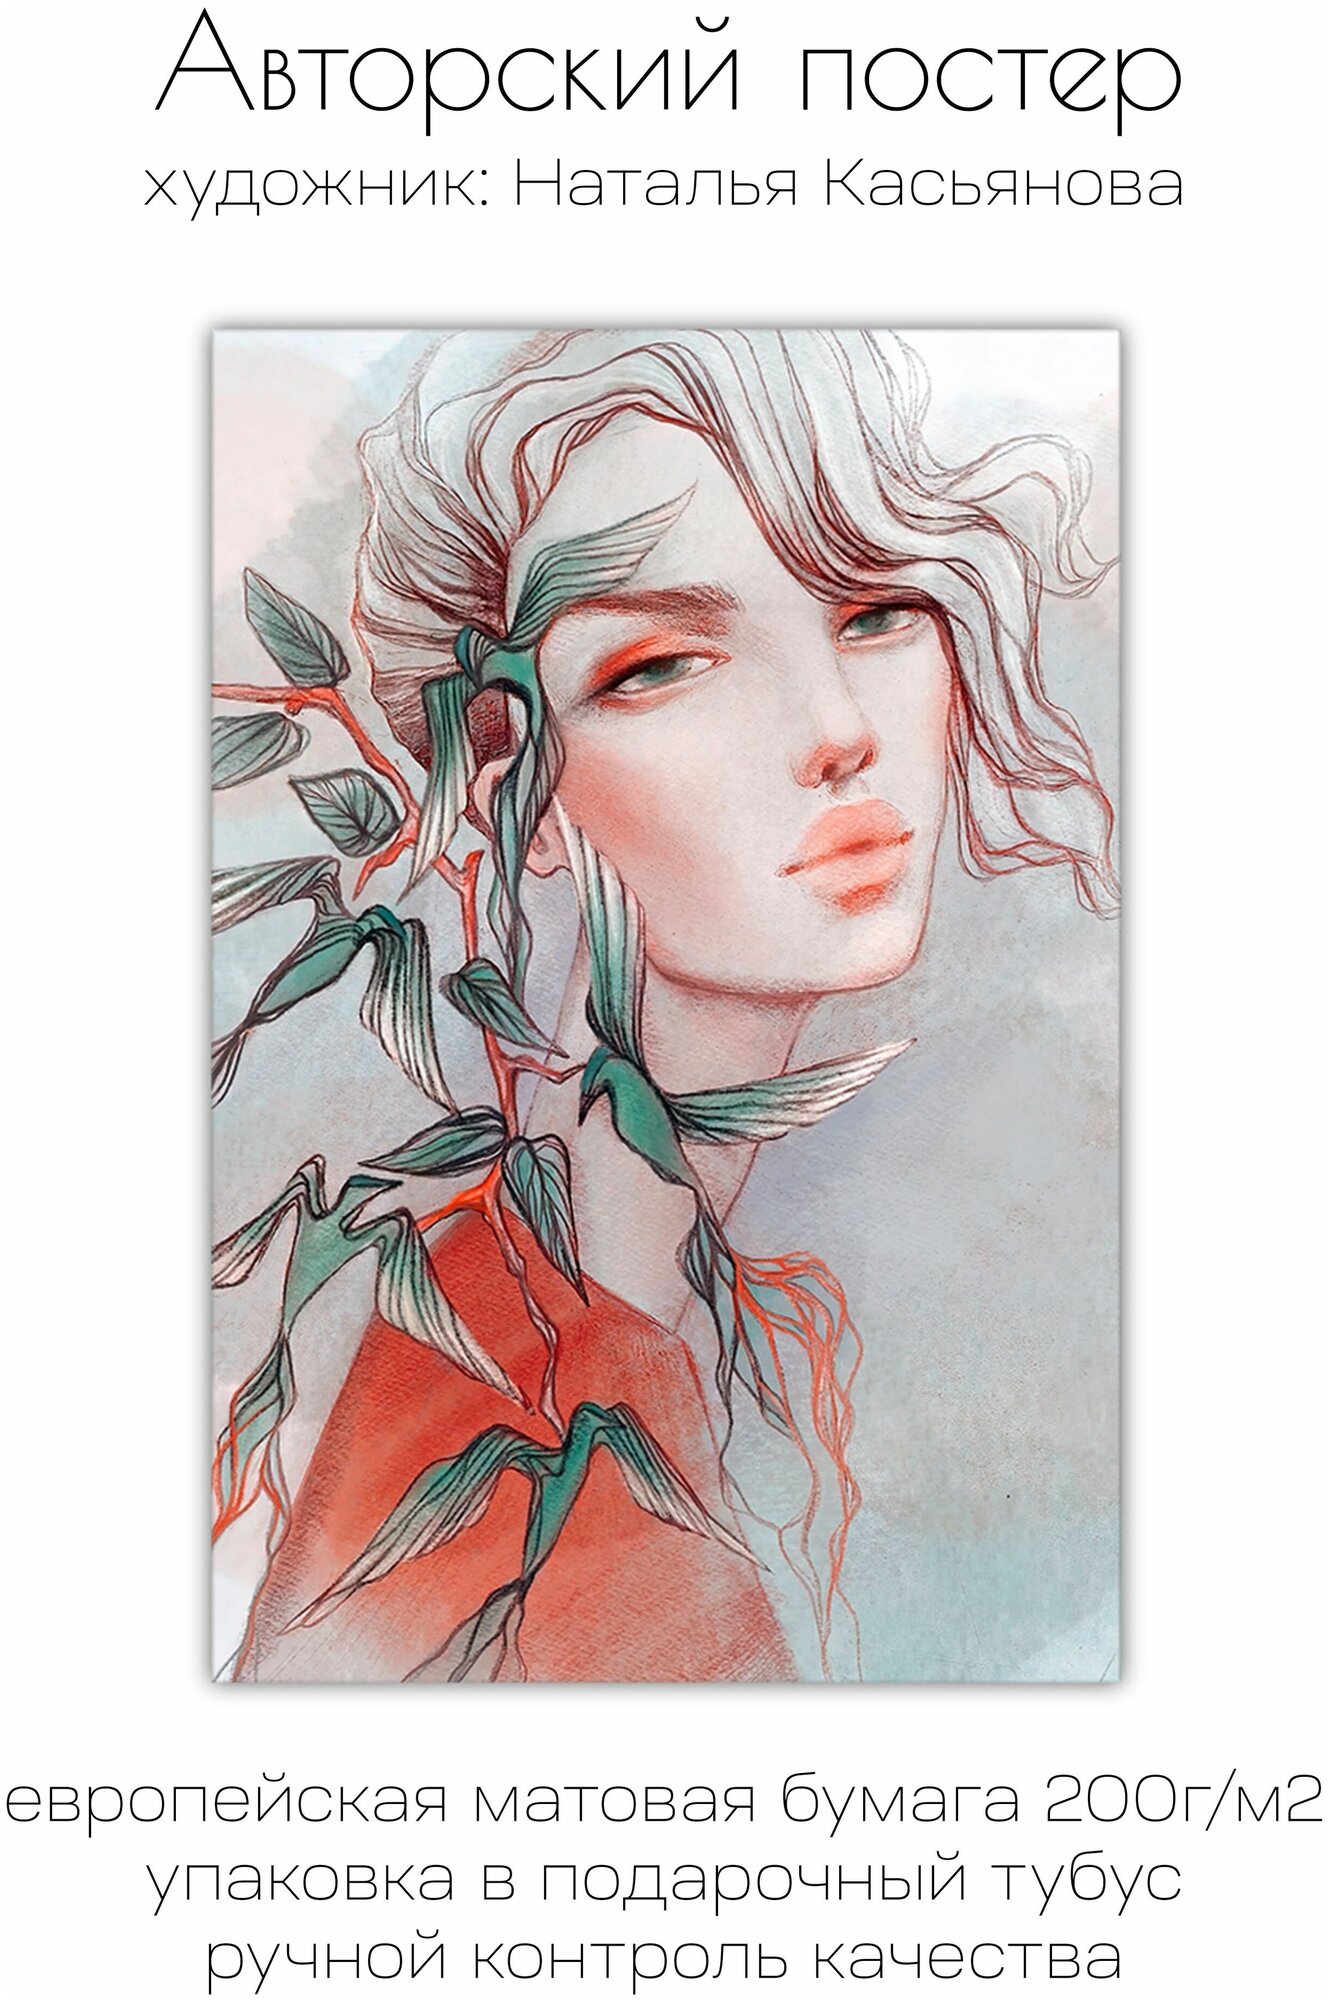 Интерьерный постер 50х70см "Wingflowers", Наталья Касьянова от Gallery 5 Store